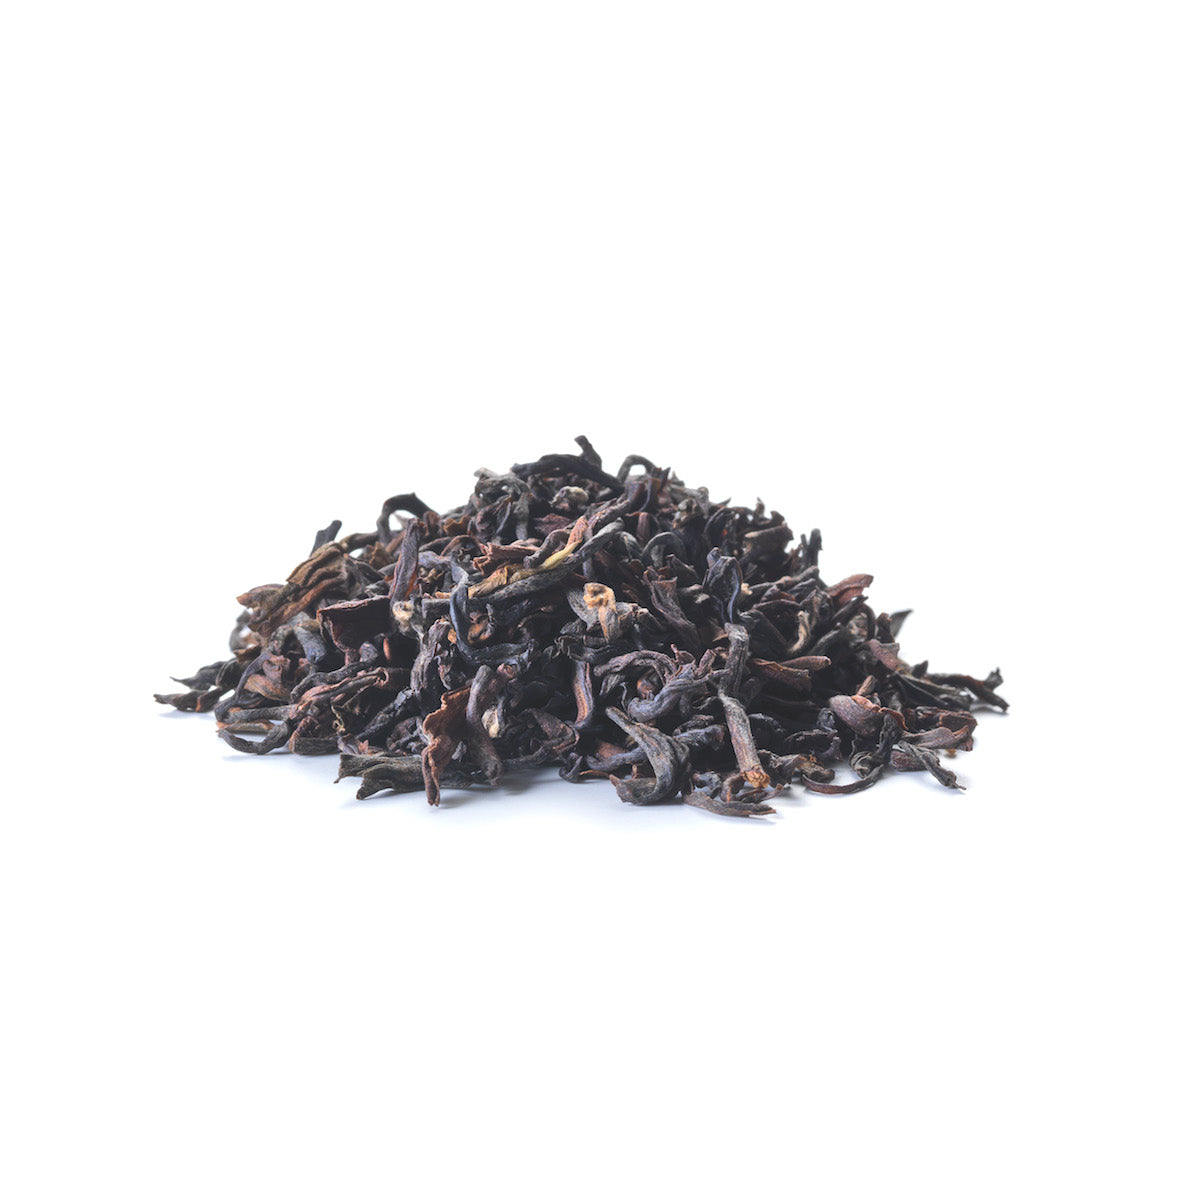 SIROCCO - Purple Breeze Tea 100% organic handcrafted luxury tea